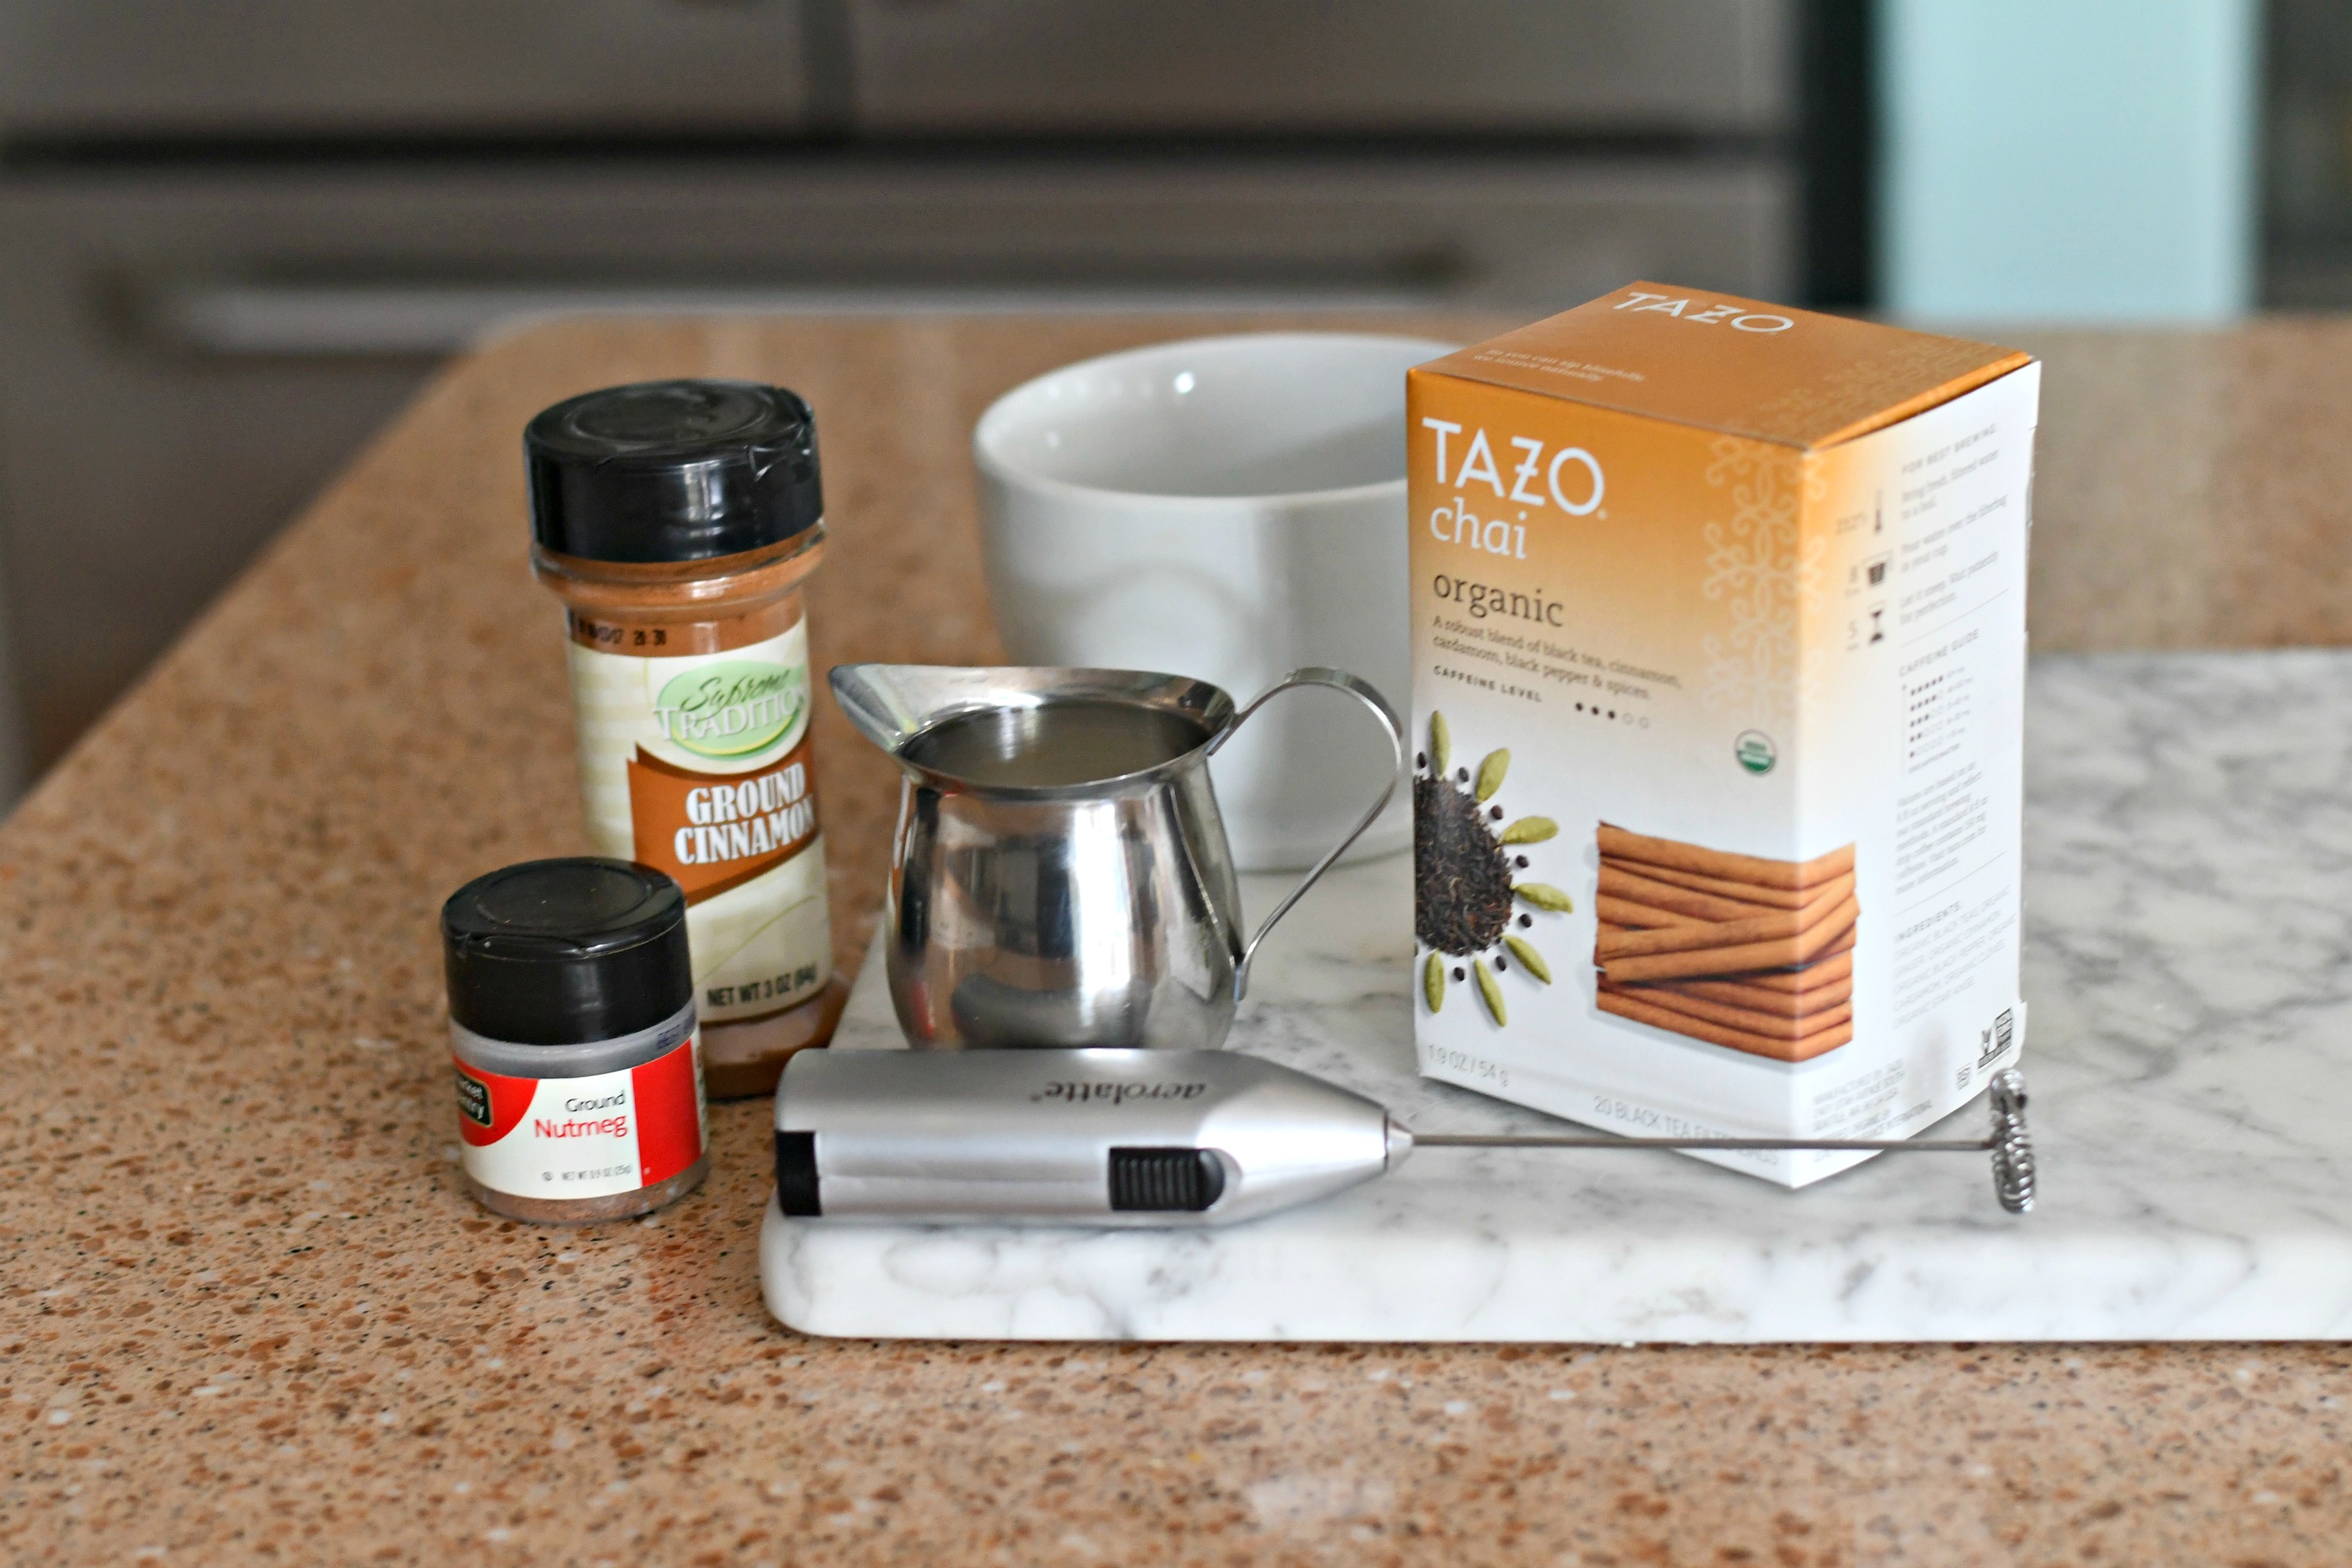 Ingredients to make your own diy starbucks chai latte